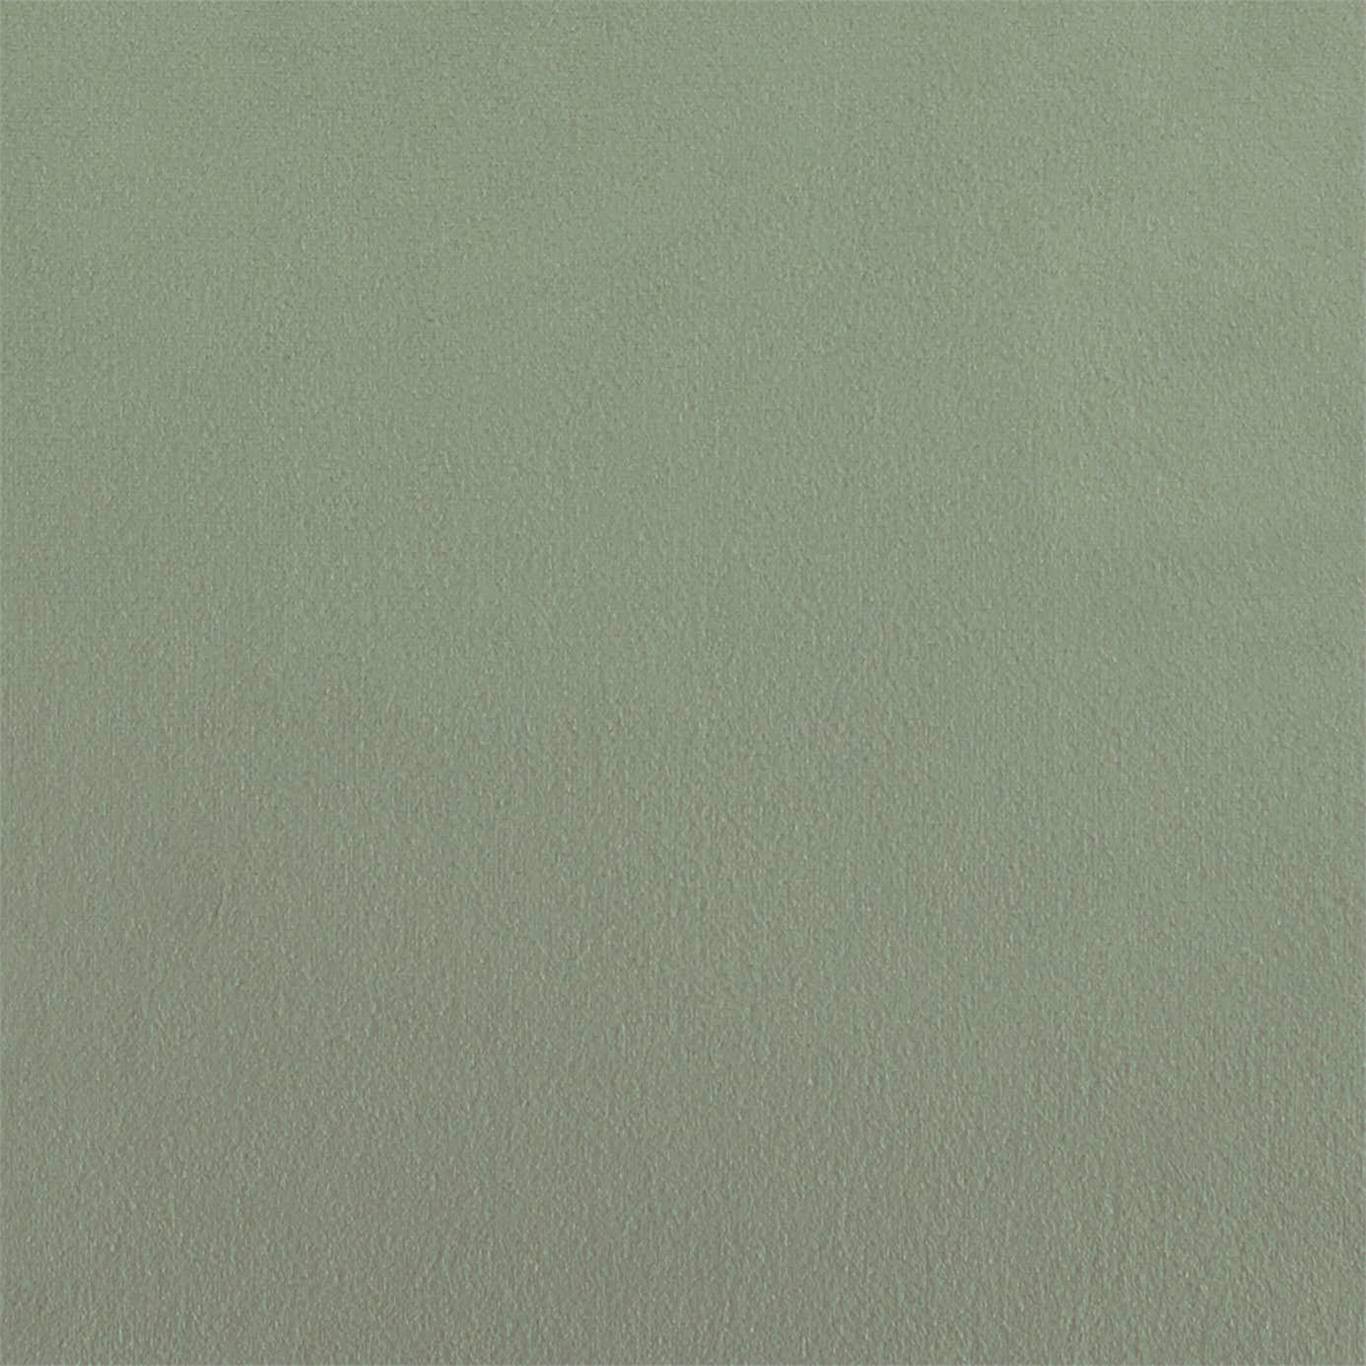 Zephyr Plain Green Stone Fabric by ZOF